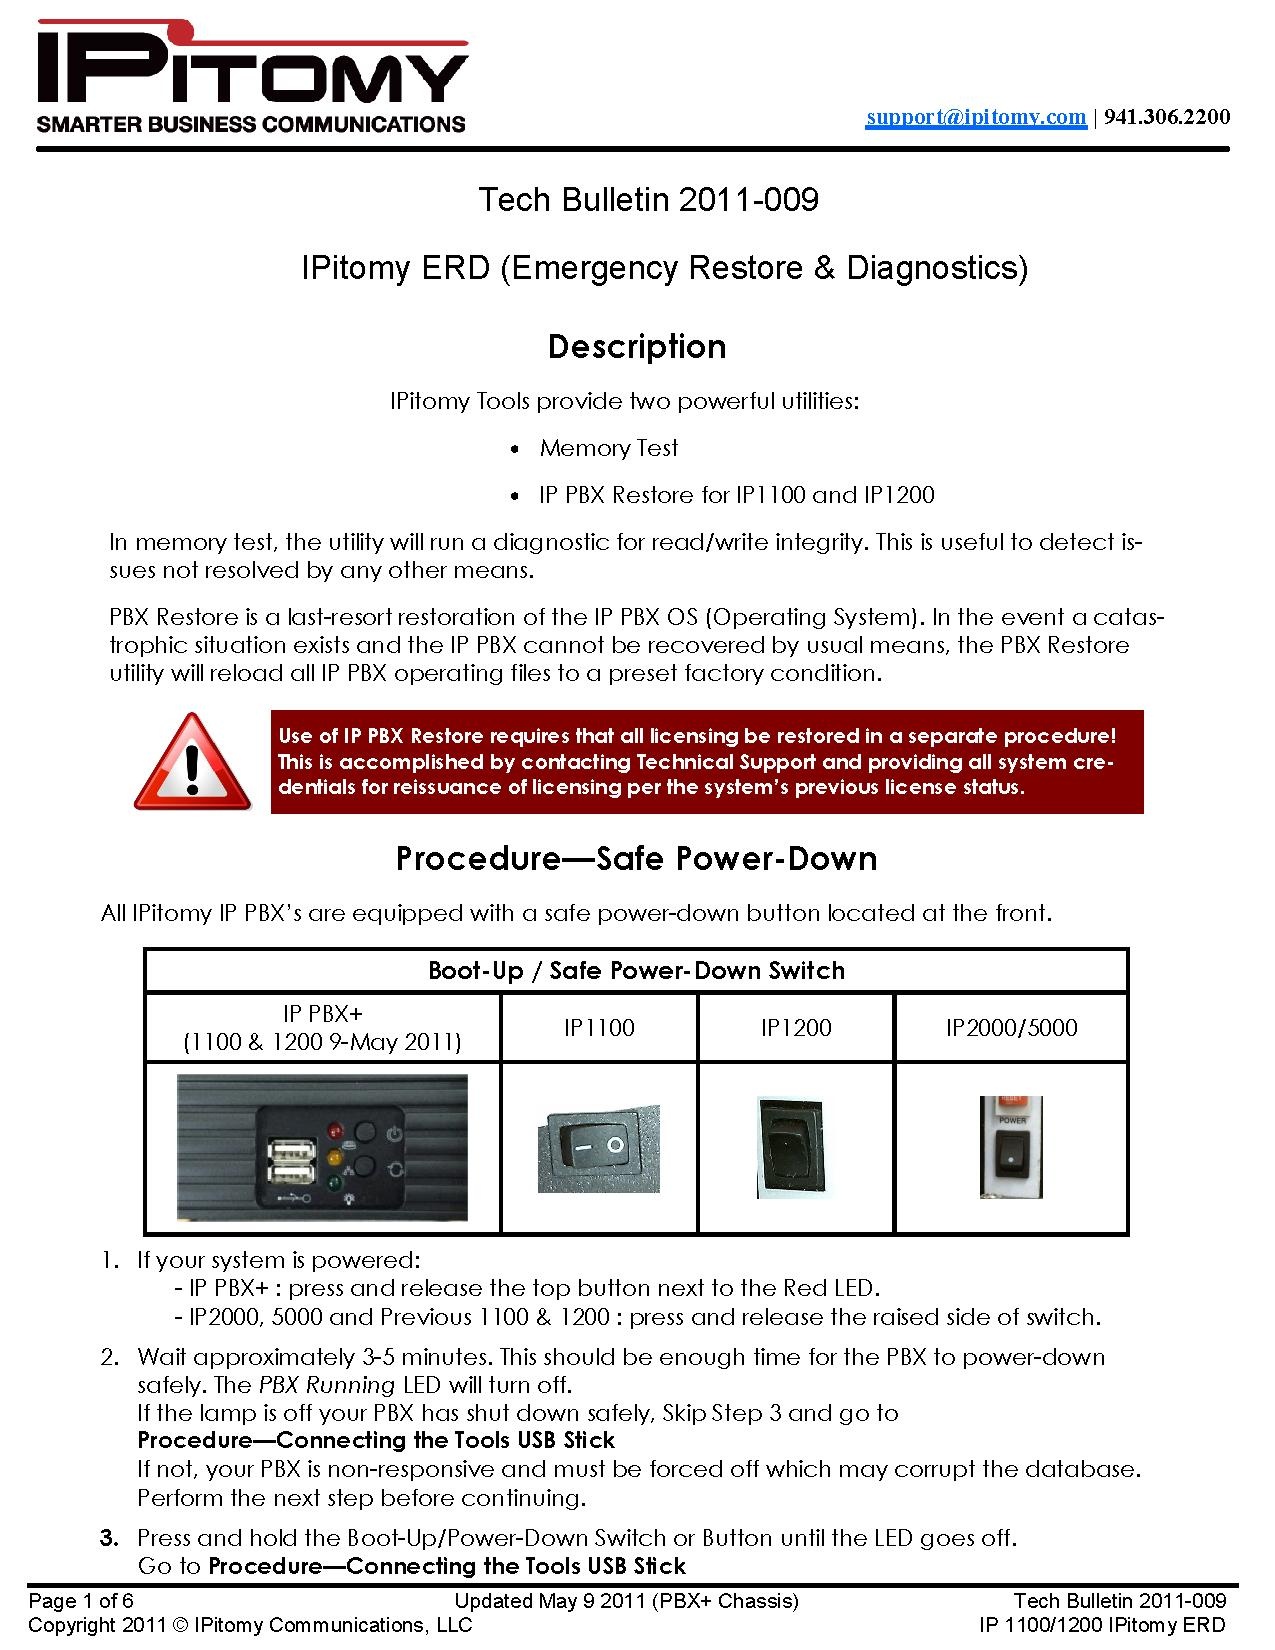 File:Tech Bulletin 2011-009 - IPitomy ERD v 2.0.pdf